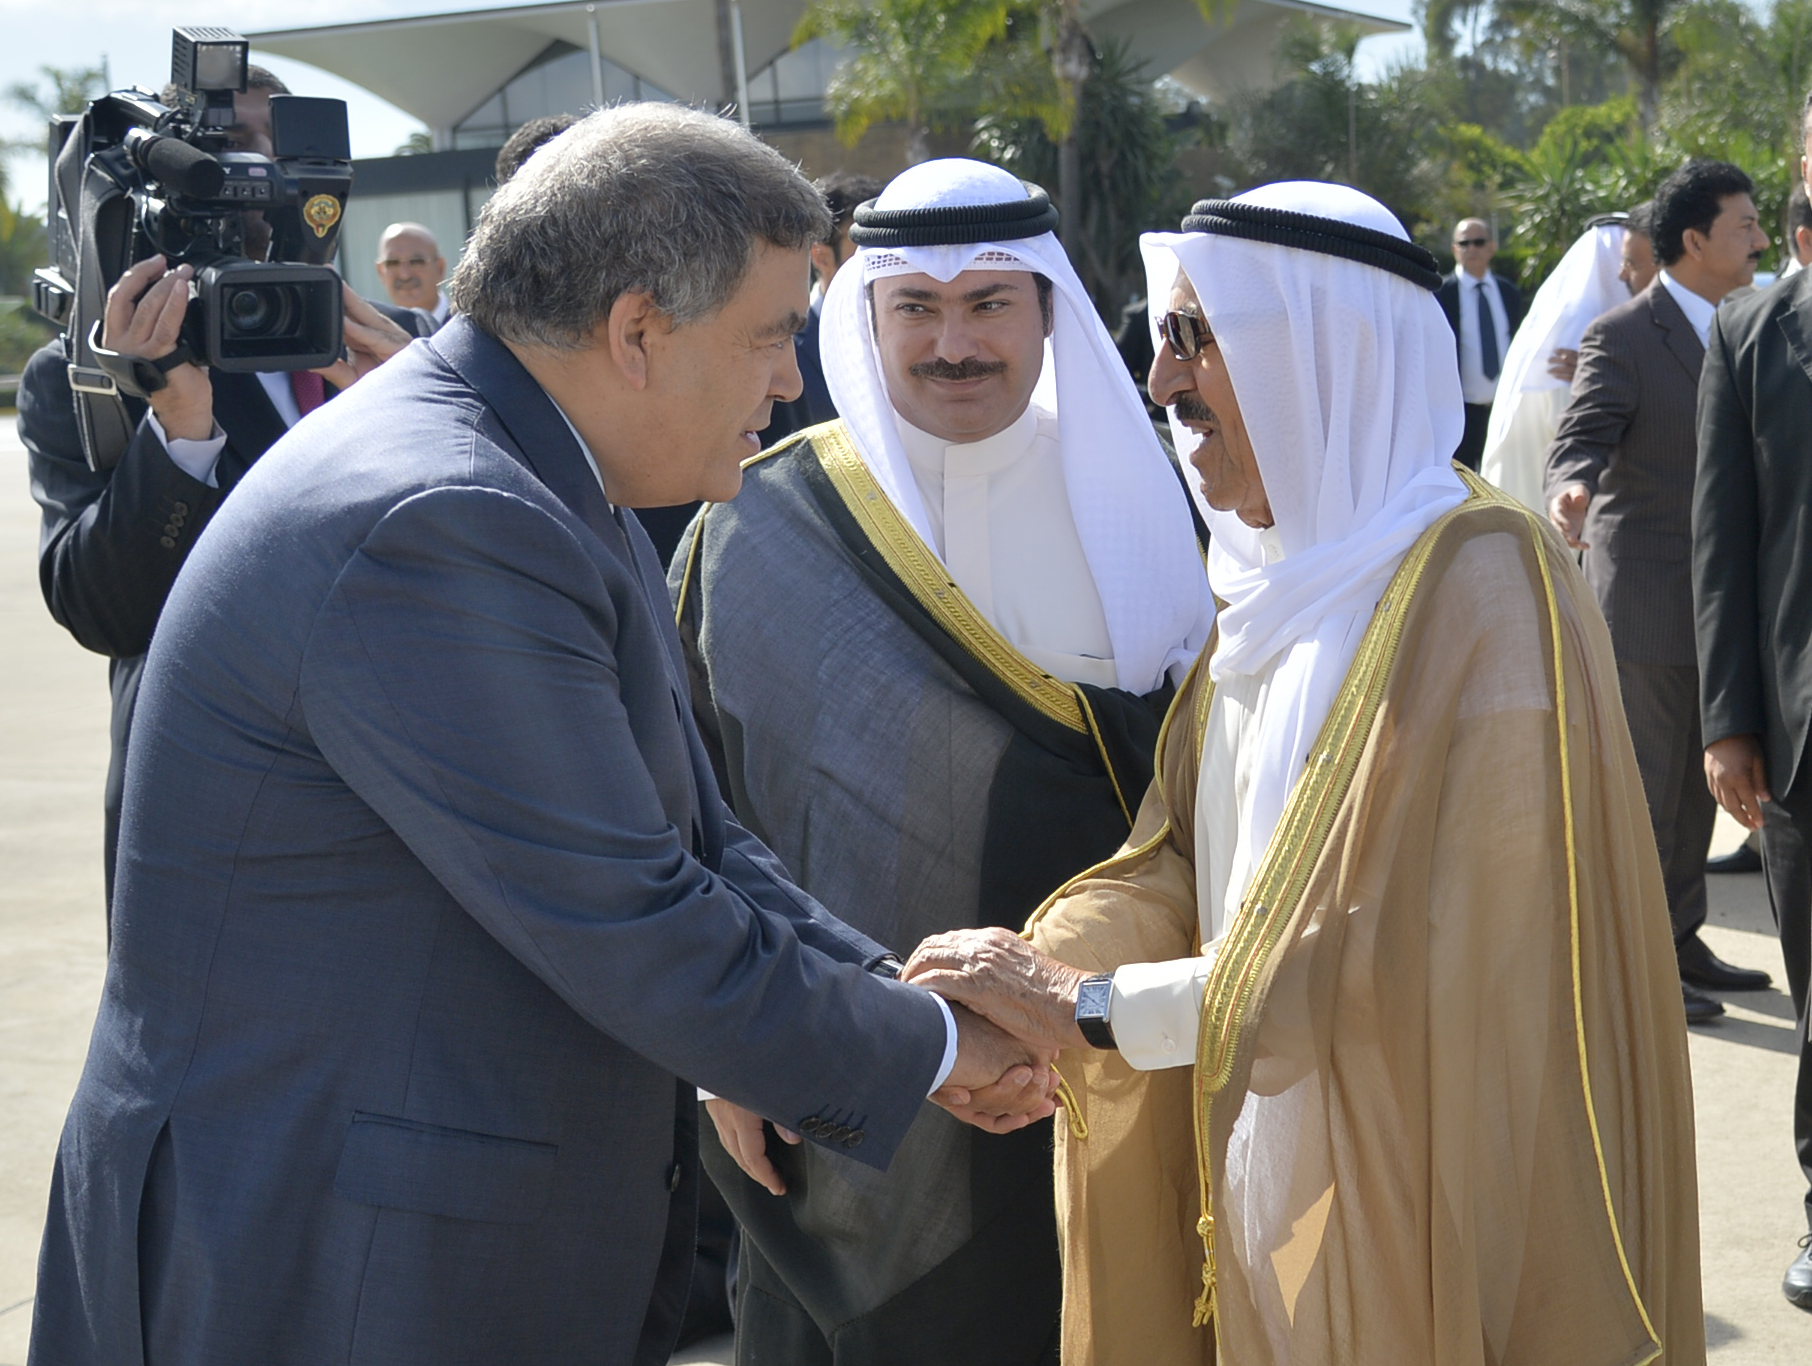 His Highness the Amir Sheikh Sabah Al-Ahmad Al-Jaber Al-Sabah and  Moroccan capital Governor Abdul Wafi